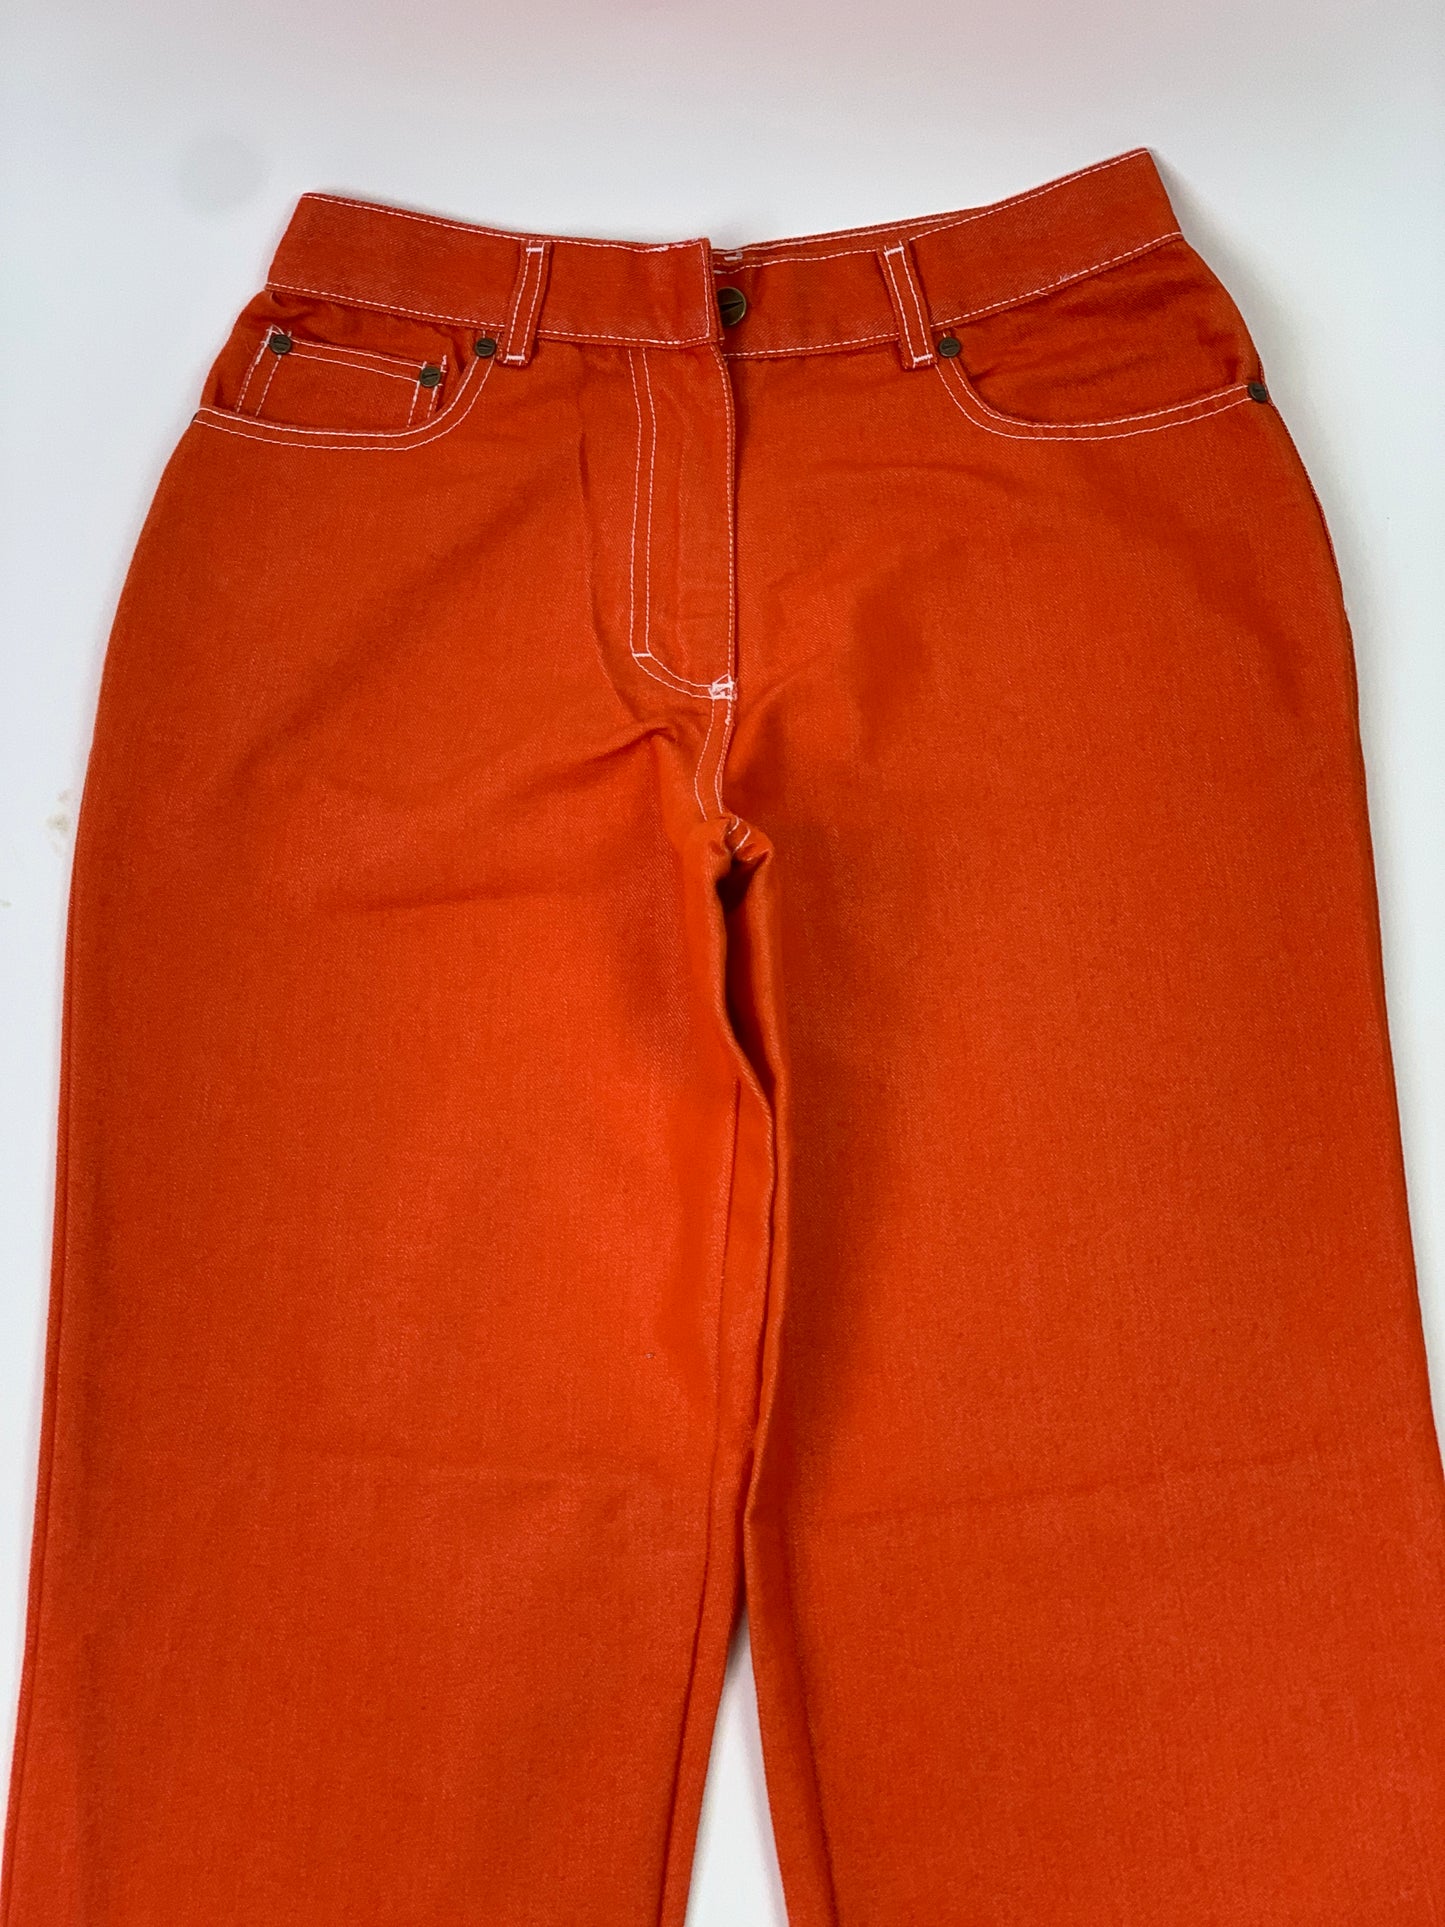 Nike Vintage Naranja Jeans - 29